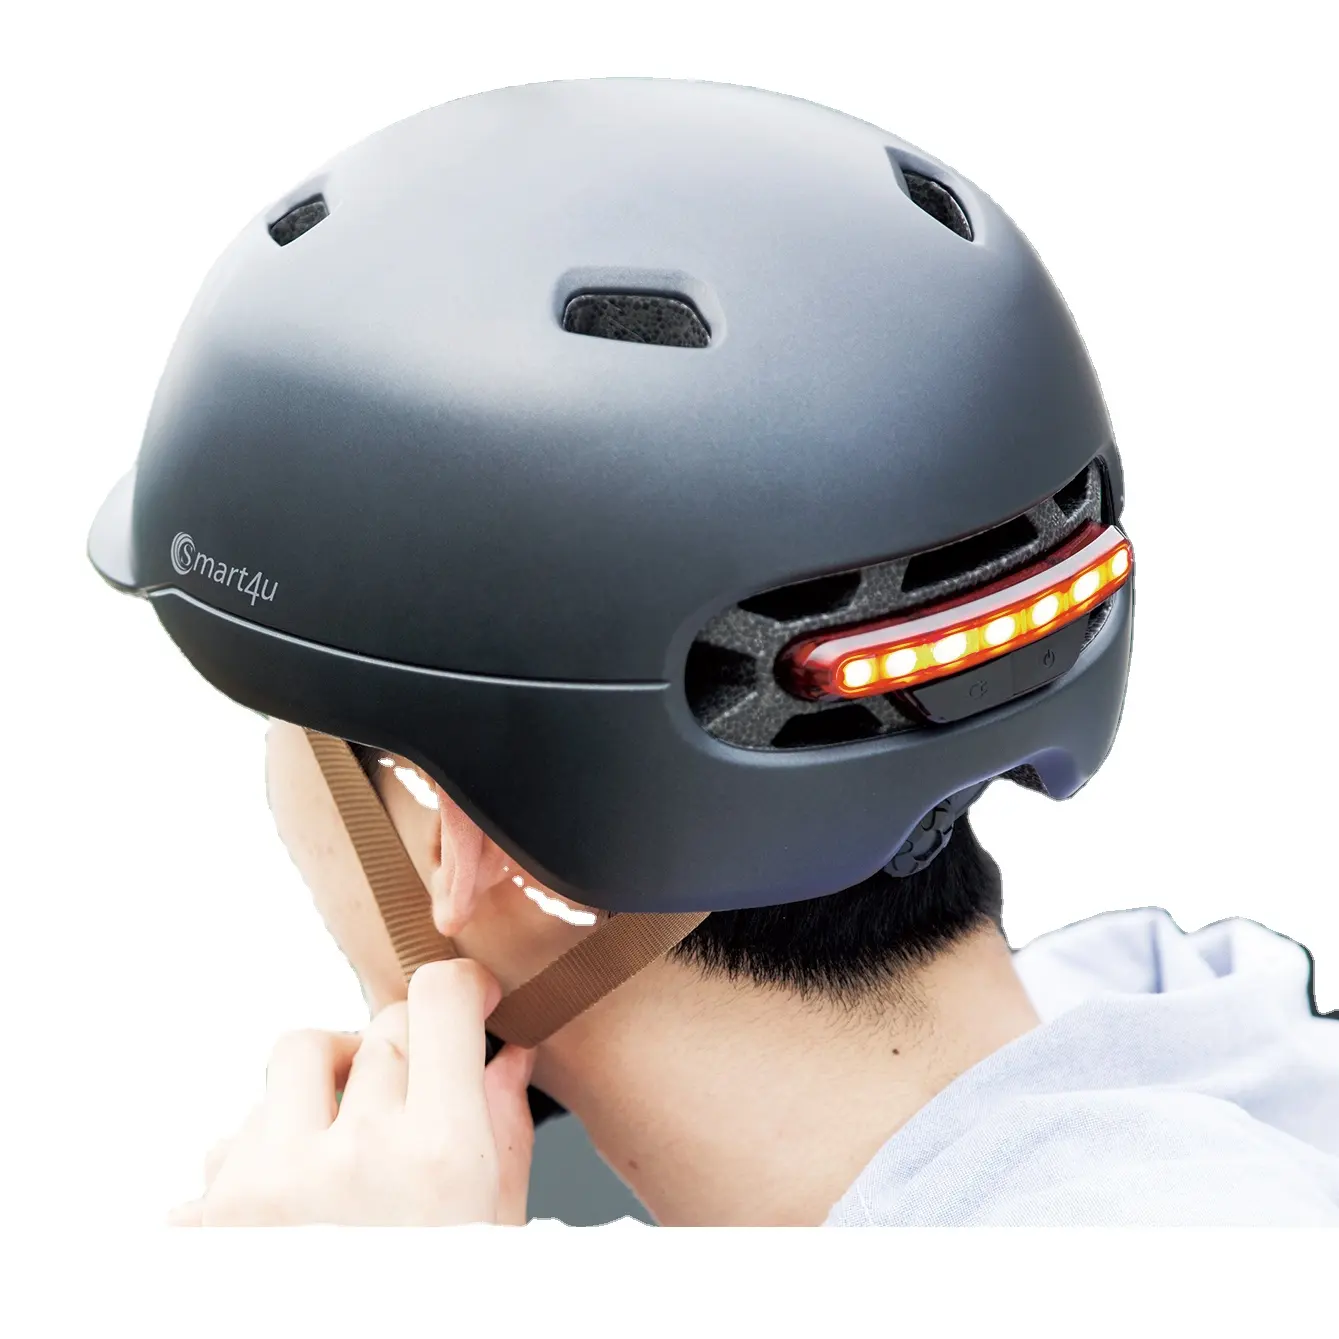 Hot Sales Smart4u Helmet Led Cycling Bike Urban Helmet Portable Casco Bike Men Women Bicycle Smart Led Light Up Helmet